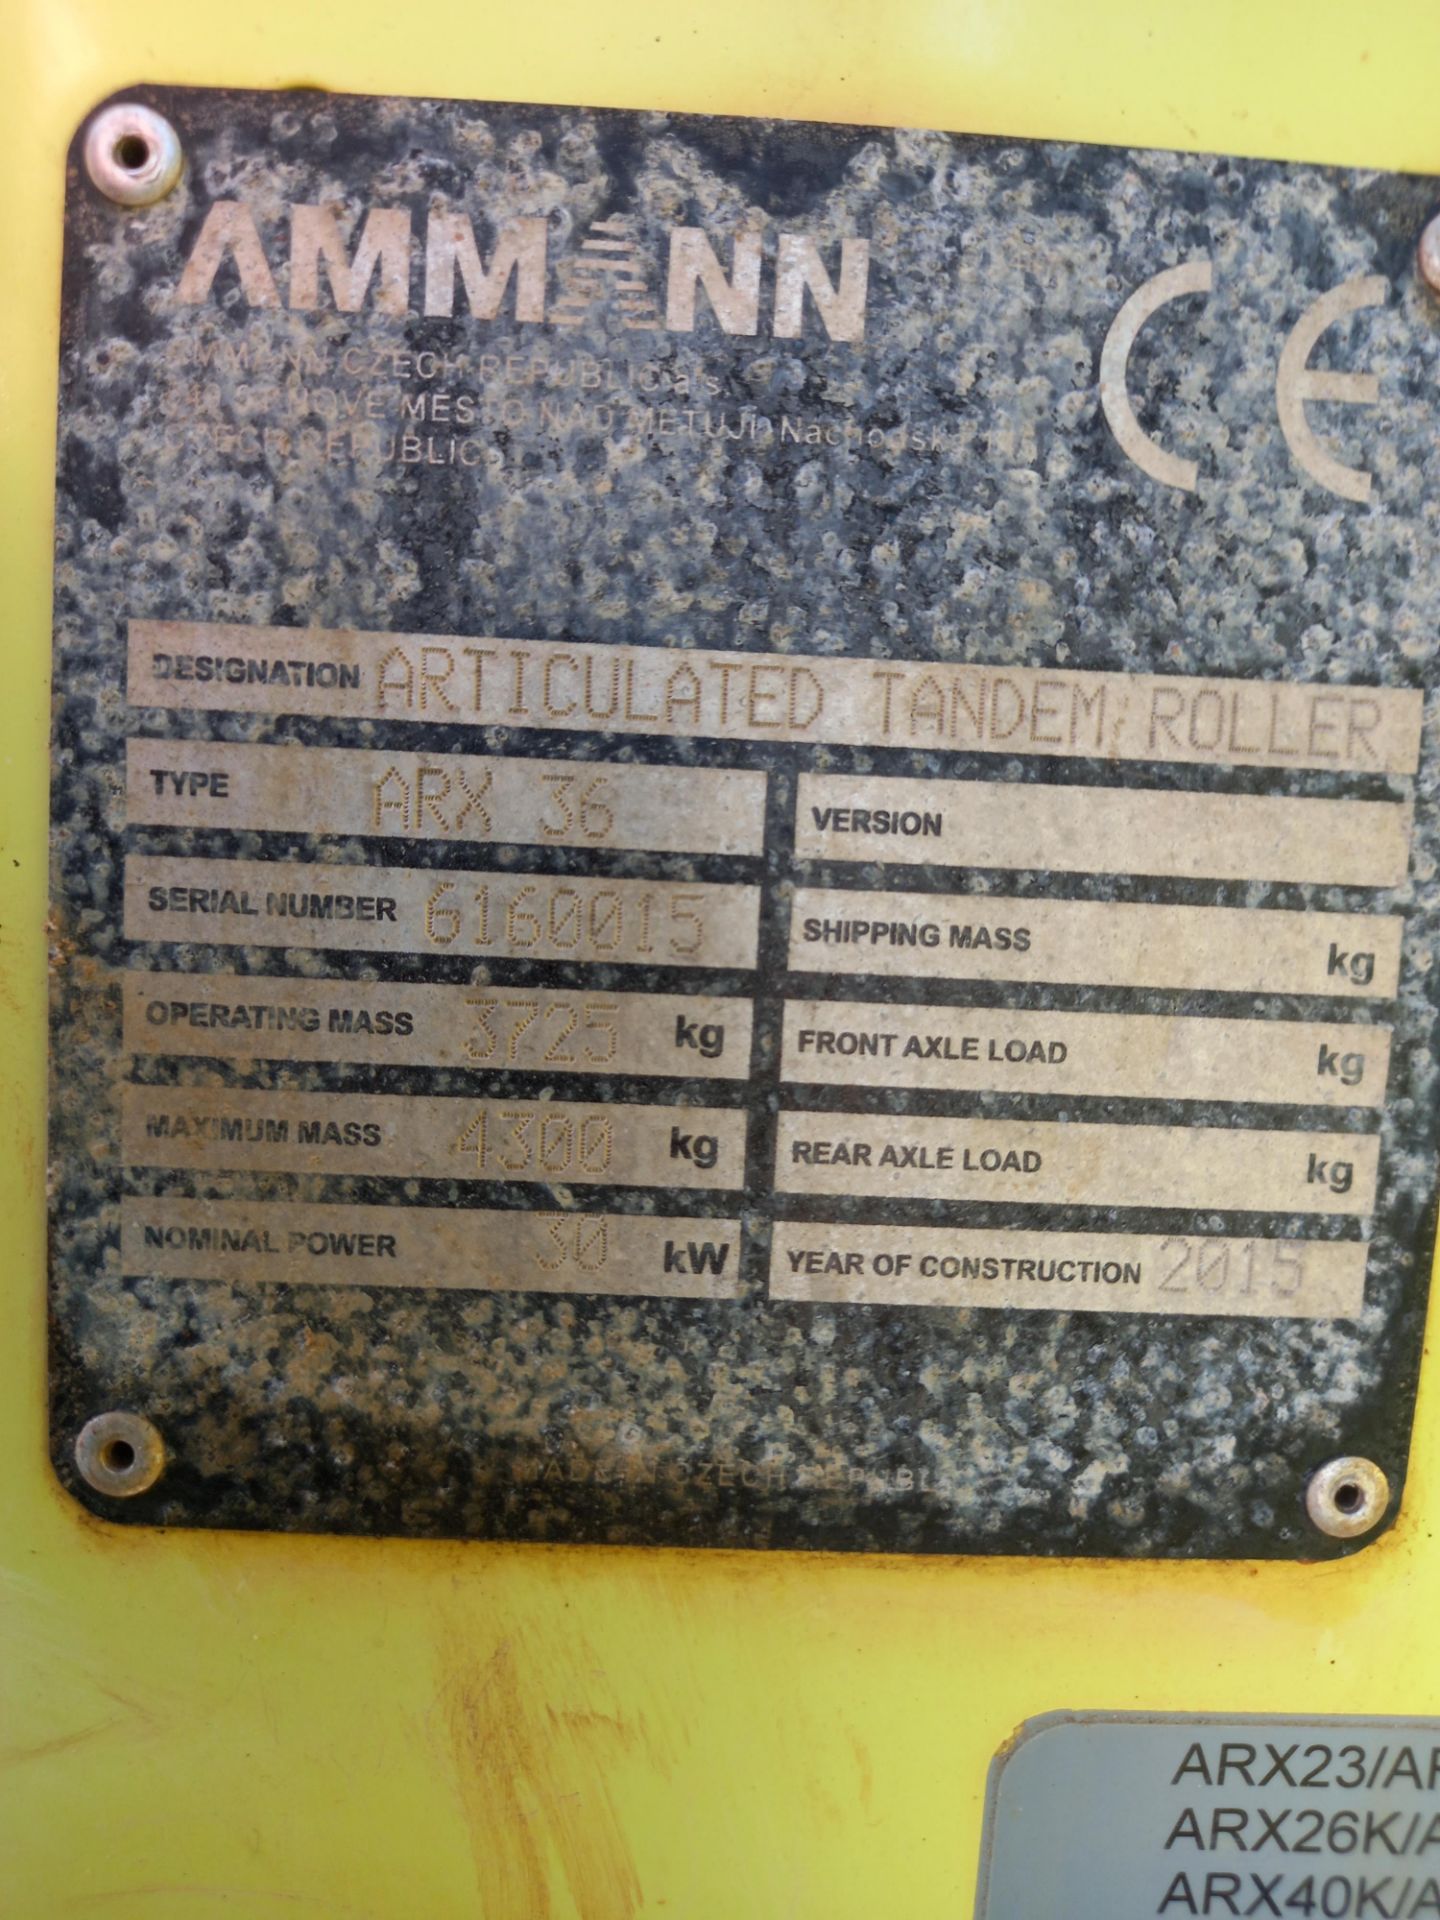 2015 Ammann ARX 36 Articulated Tandem Roller - Image 5 of 7